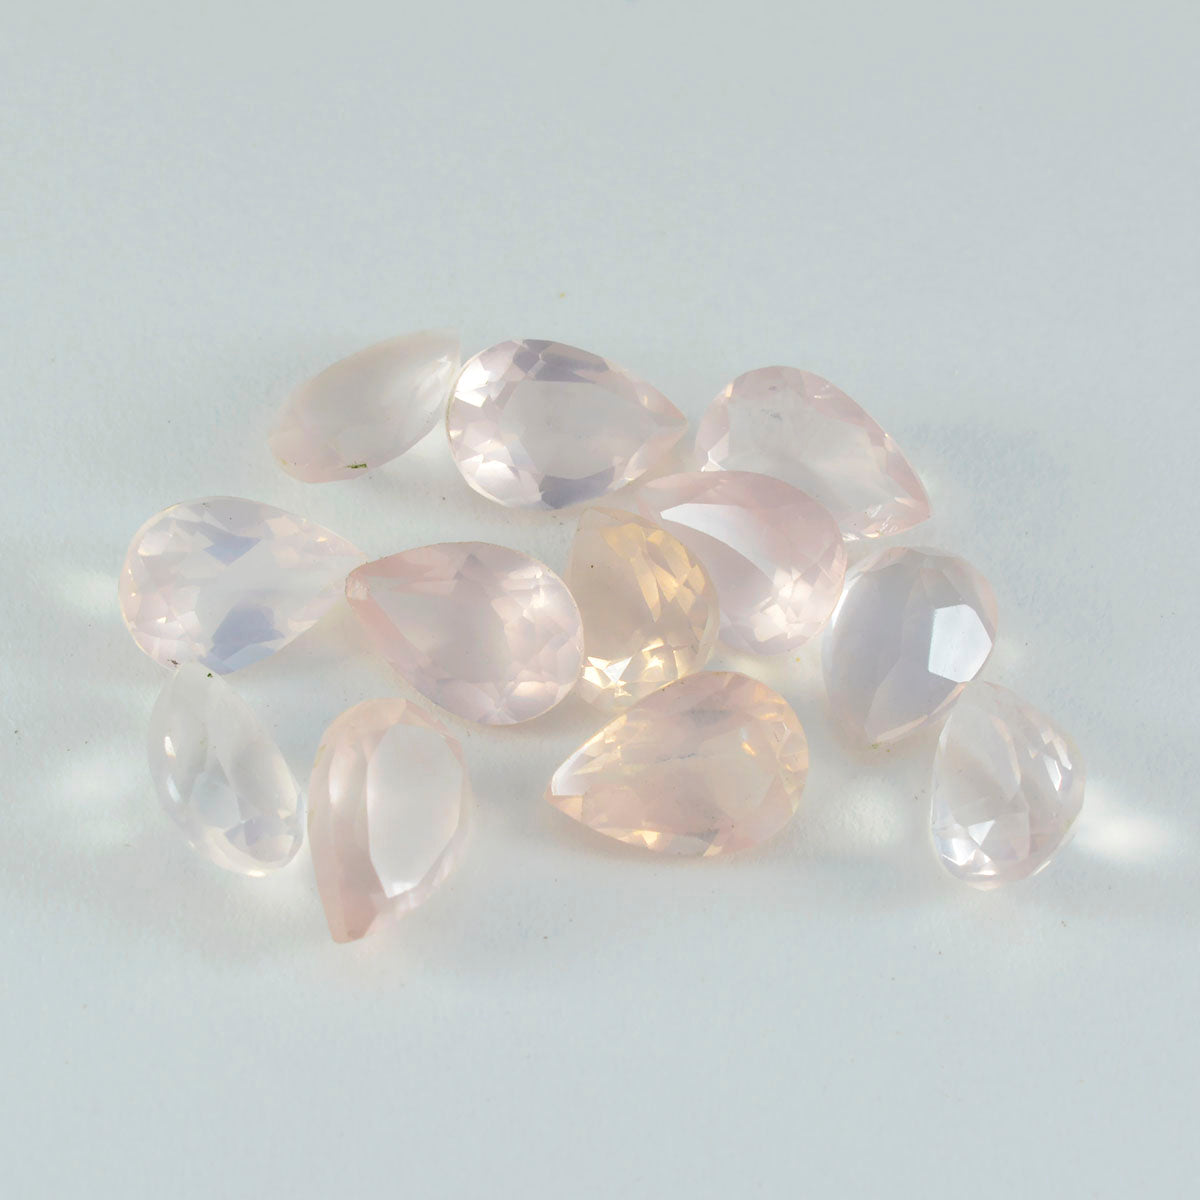 Riyogems 1PC Pink Rose Quartz Faceted 6x9 mm Pear Shape awesome Quality Gemstone